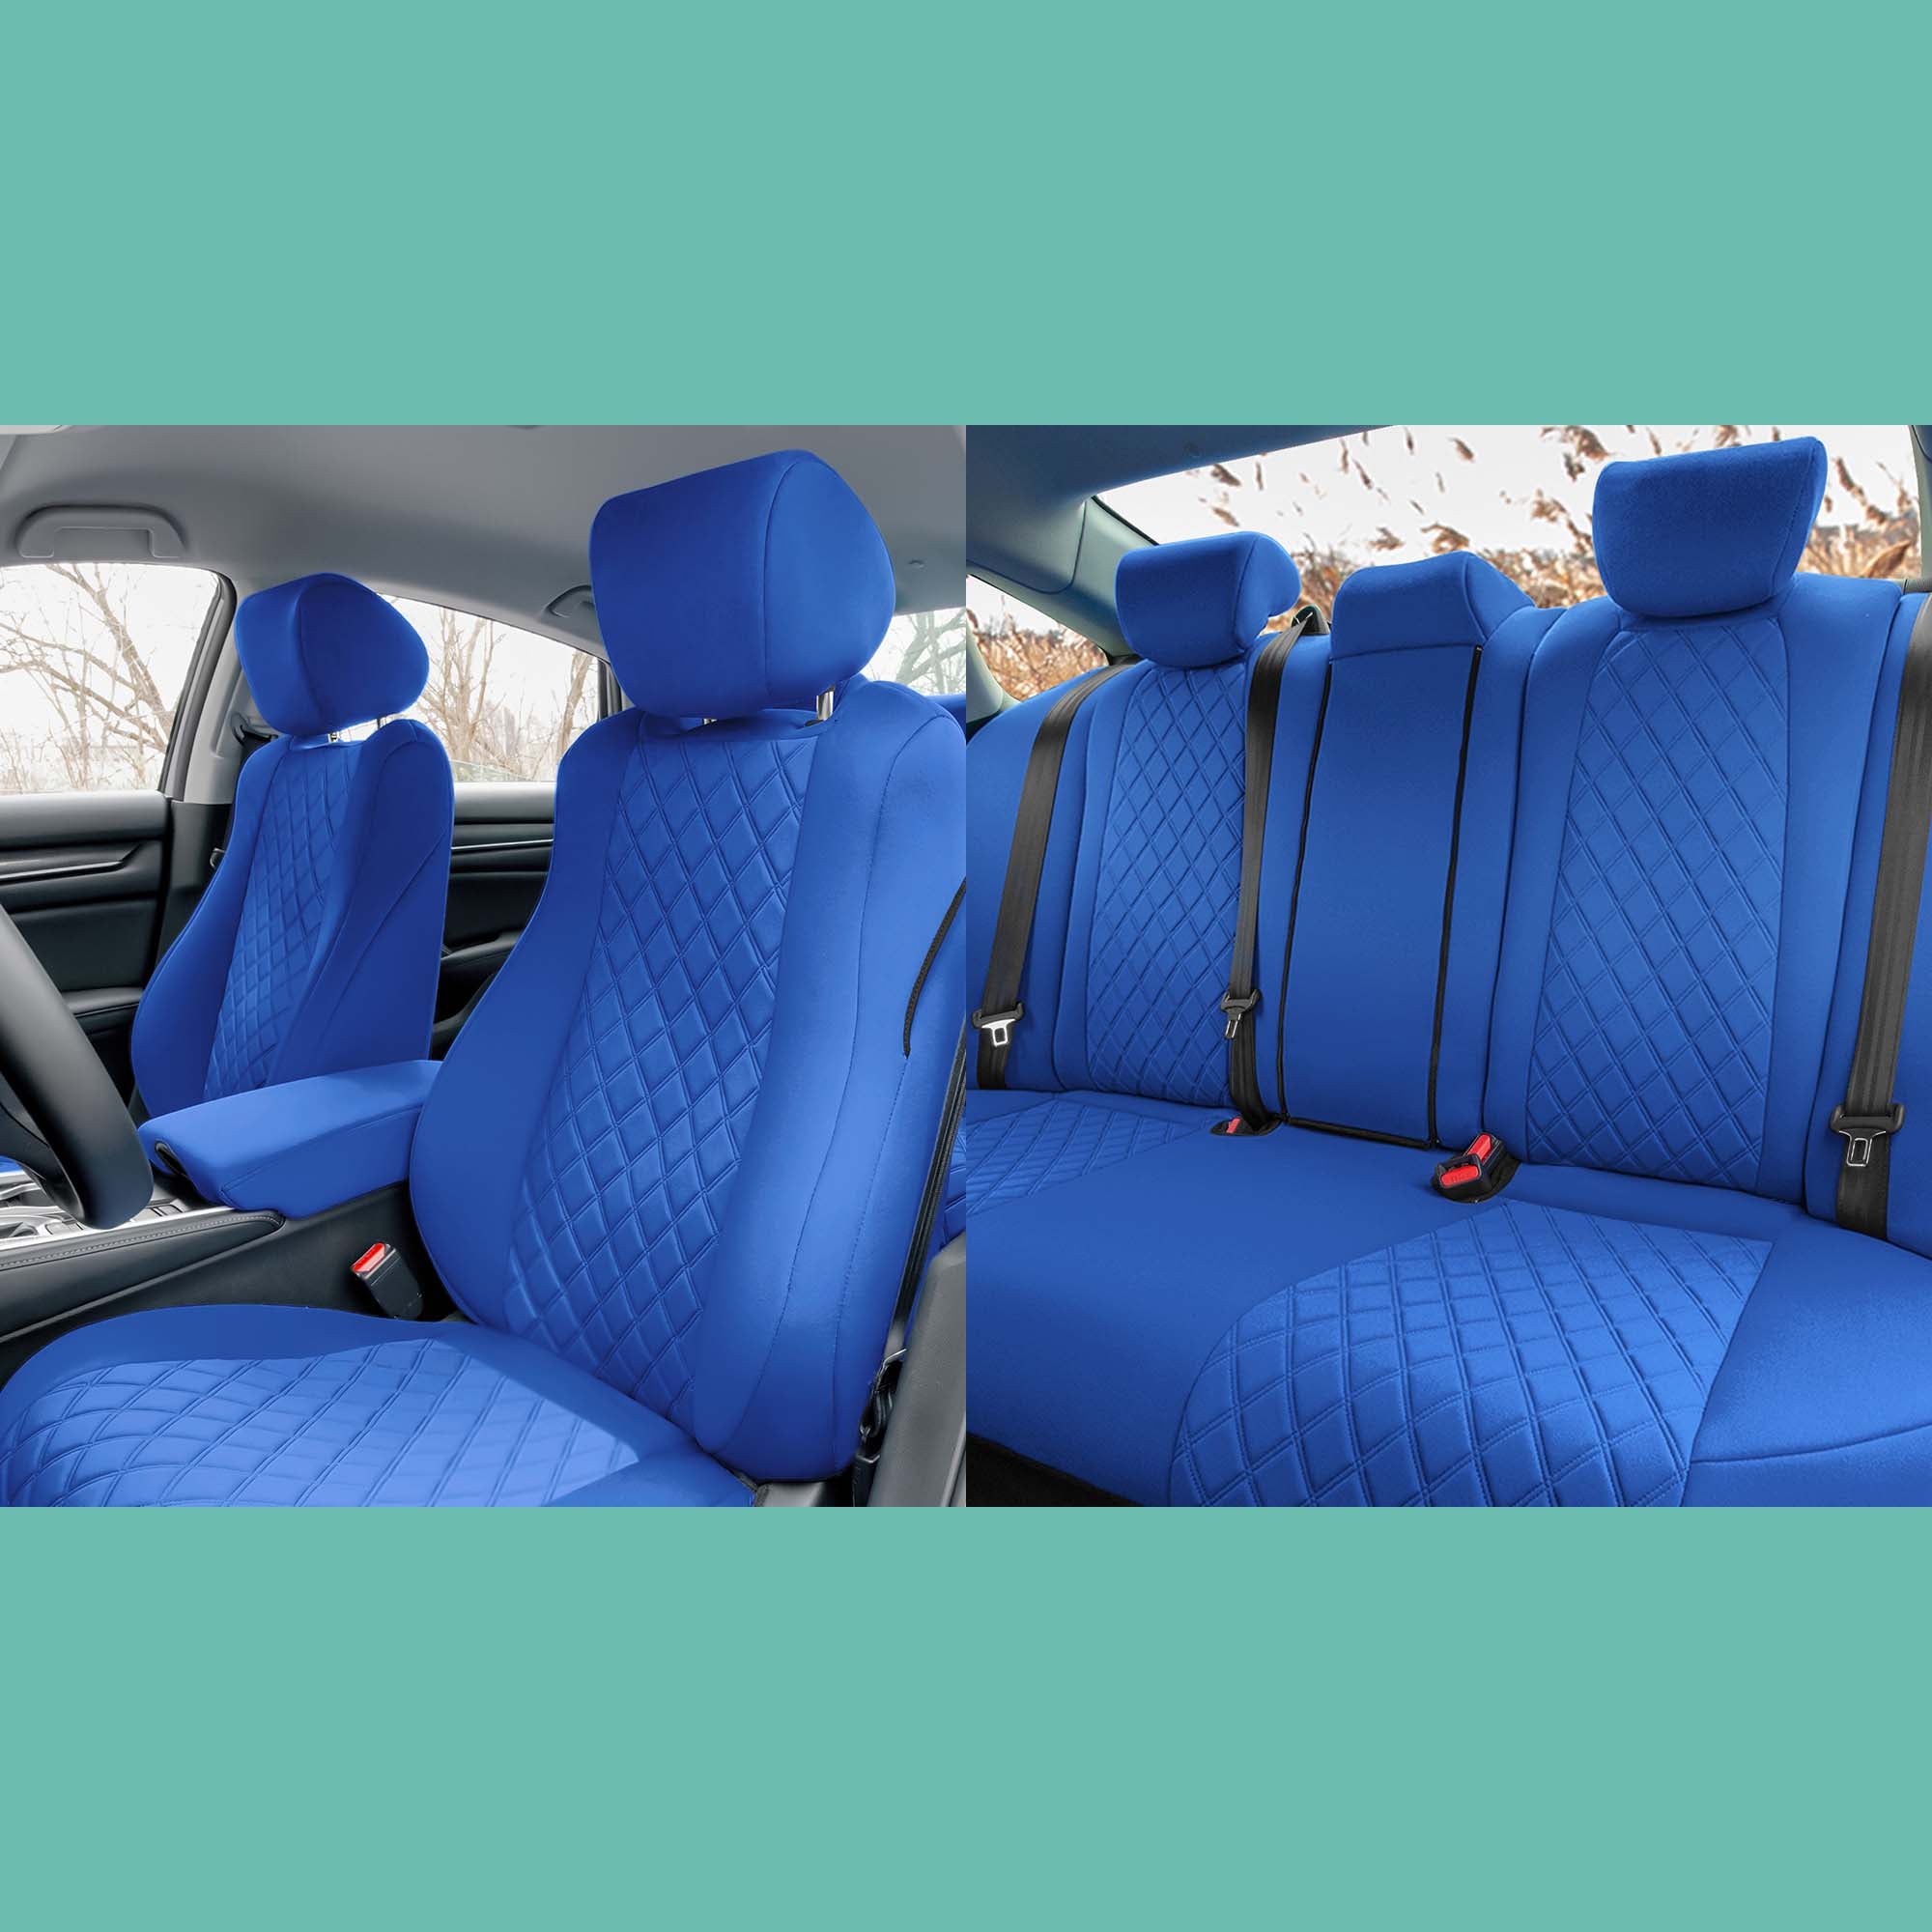 Honda Accord - 2018 - 2022 - Full Set Seat Covers - Solid Blue Ultraflex Neoprene